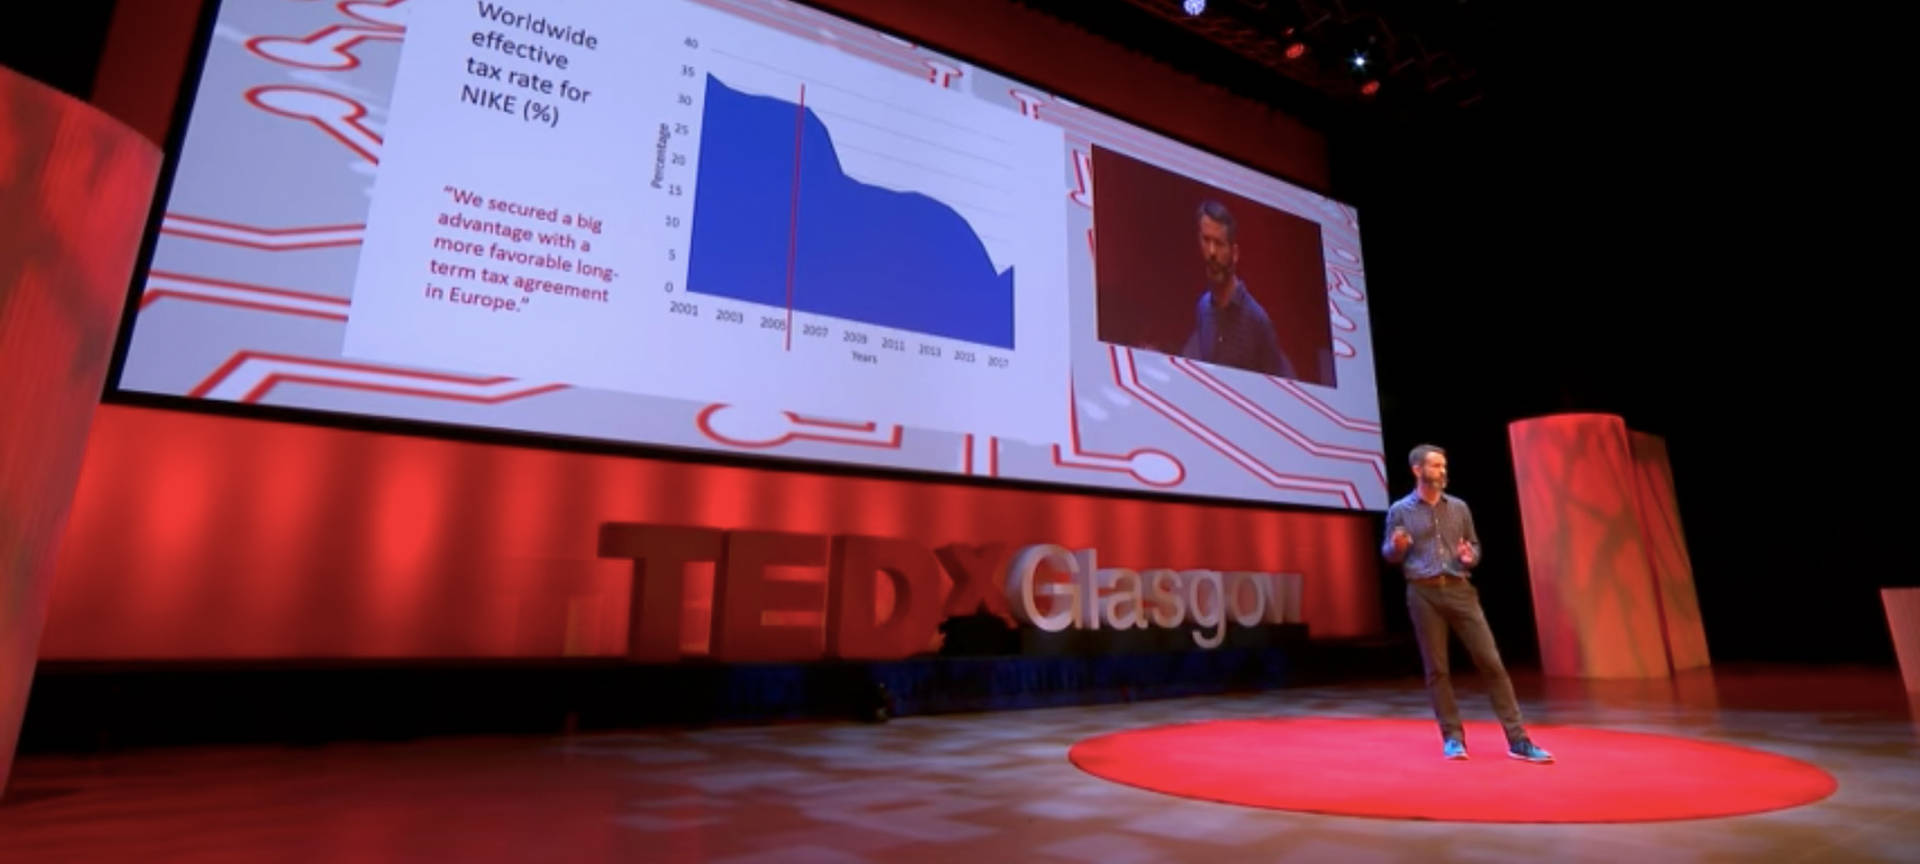 Tedx Talks Event In Glasgow Wallpaper